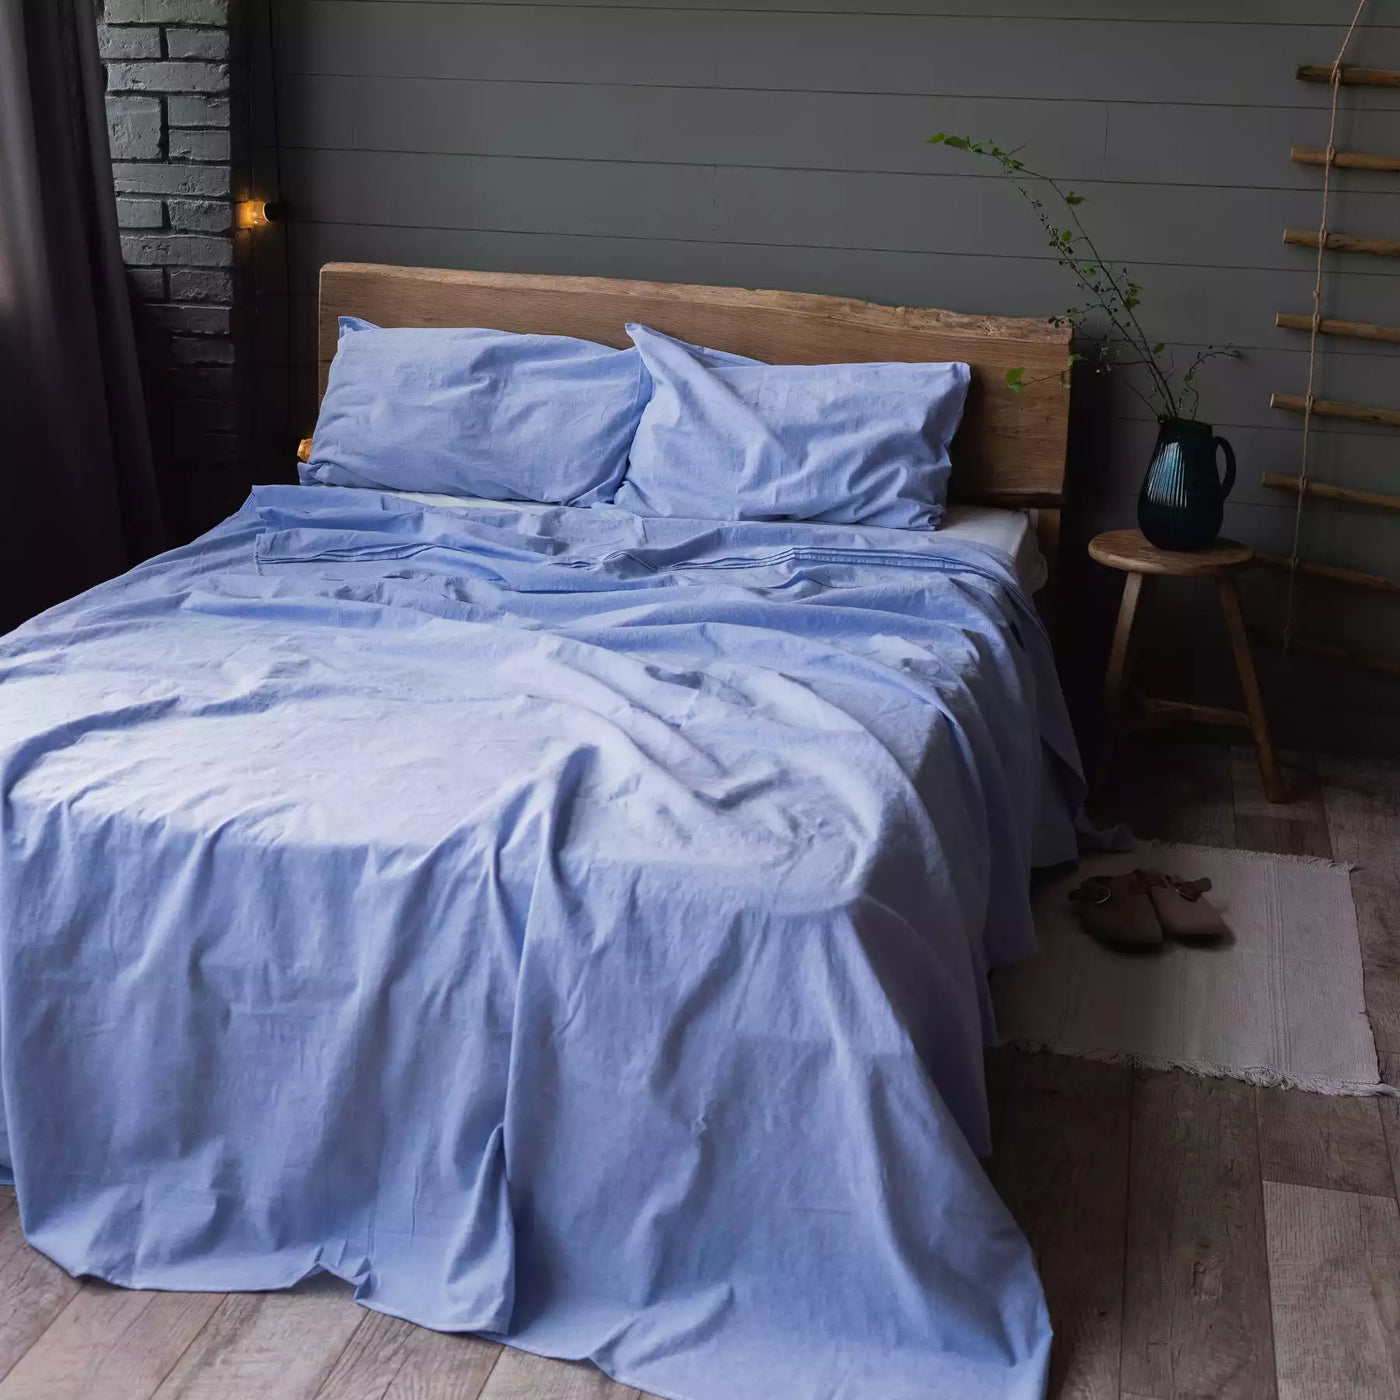 Linen & Cotton Pillowcase Set in Blue Melange